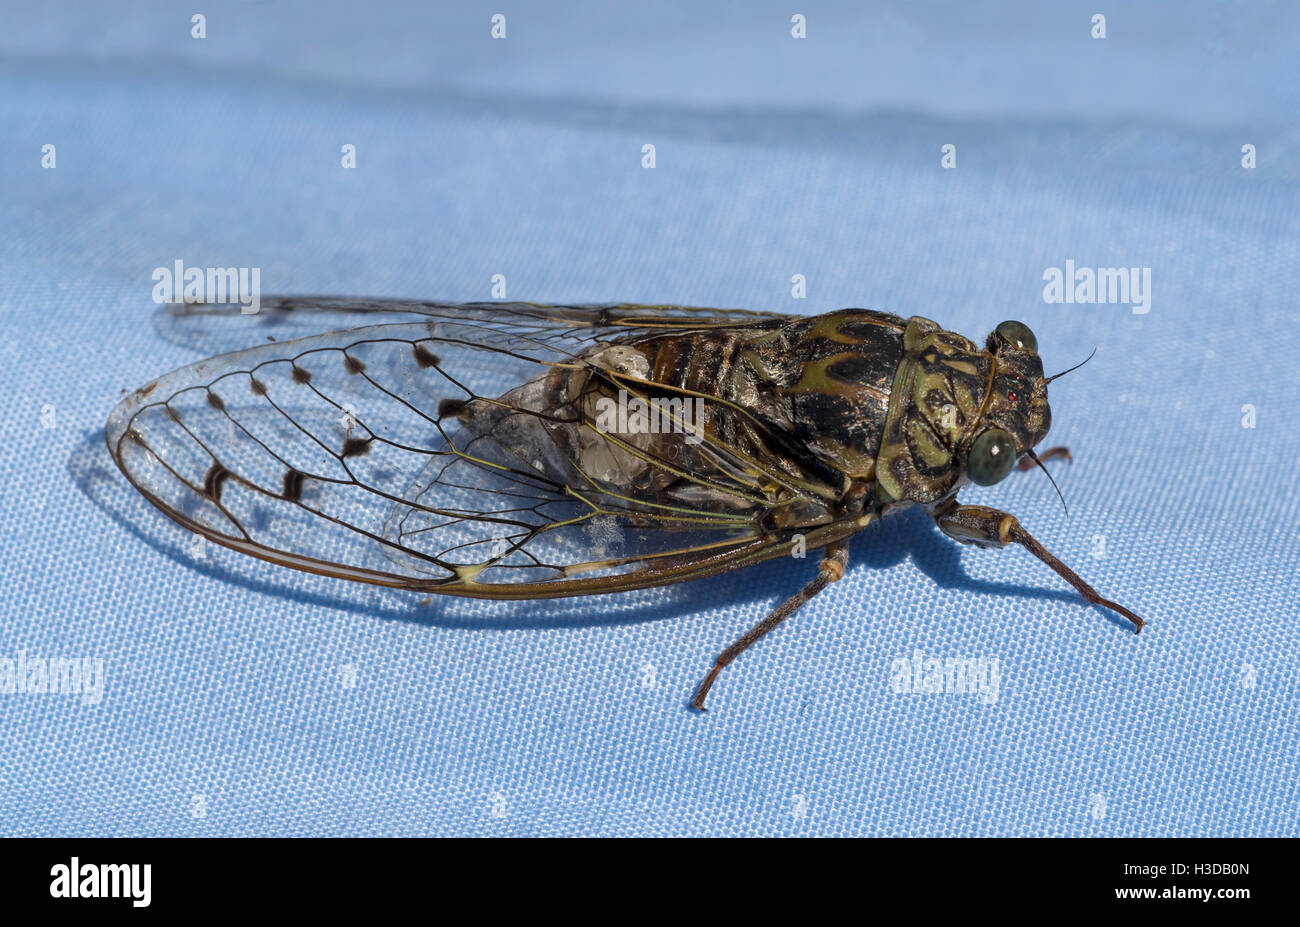 European Cicada - seems to have signs of fungus, maybe Massospora. Landed on my huband's blue shirt. Stock Photo